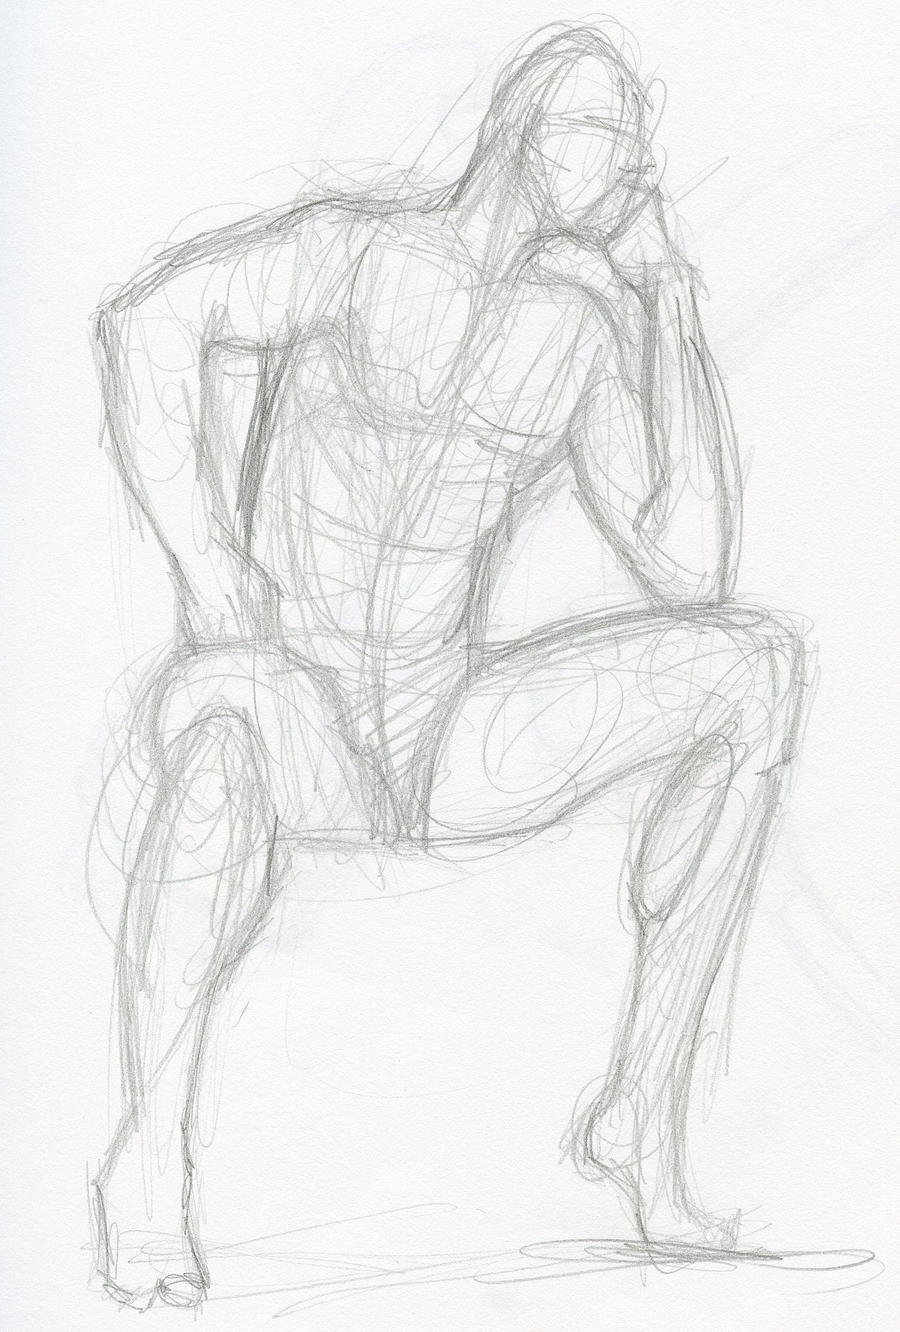 Pencil sketch figure study by phebron on DeviantArt